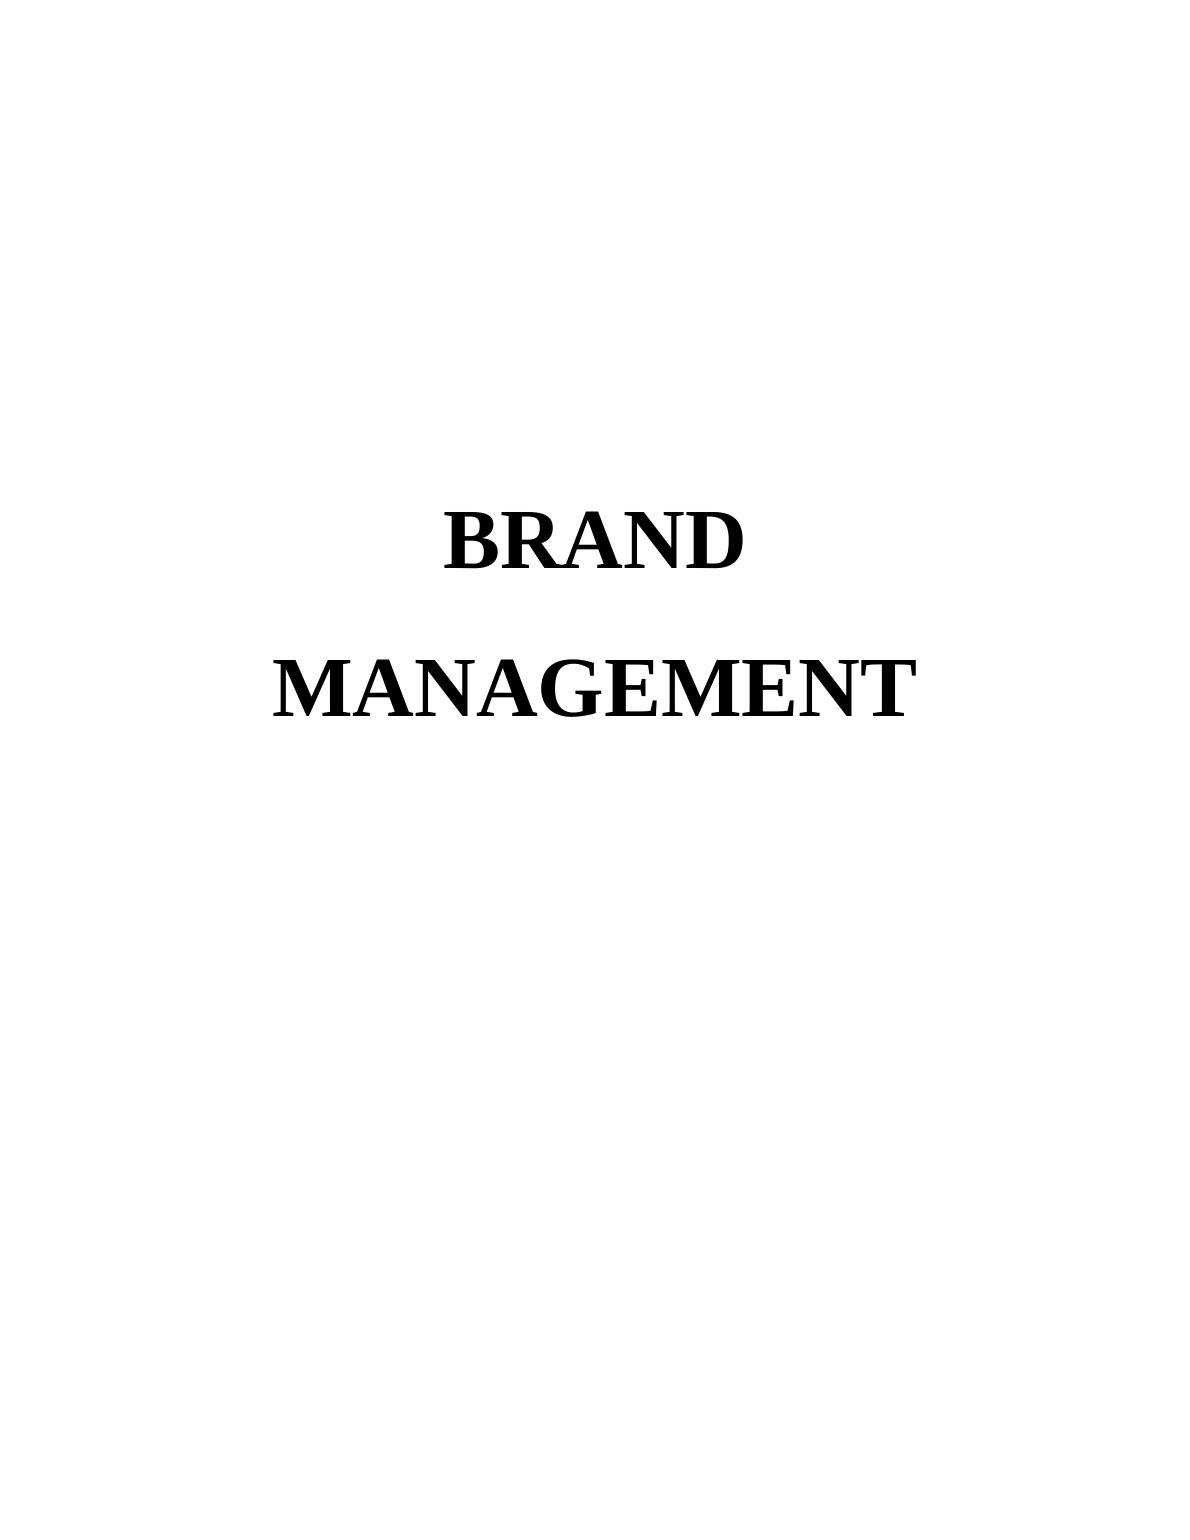 Managing and Managing Brand_1